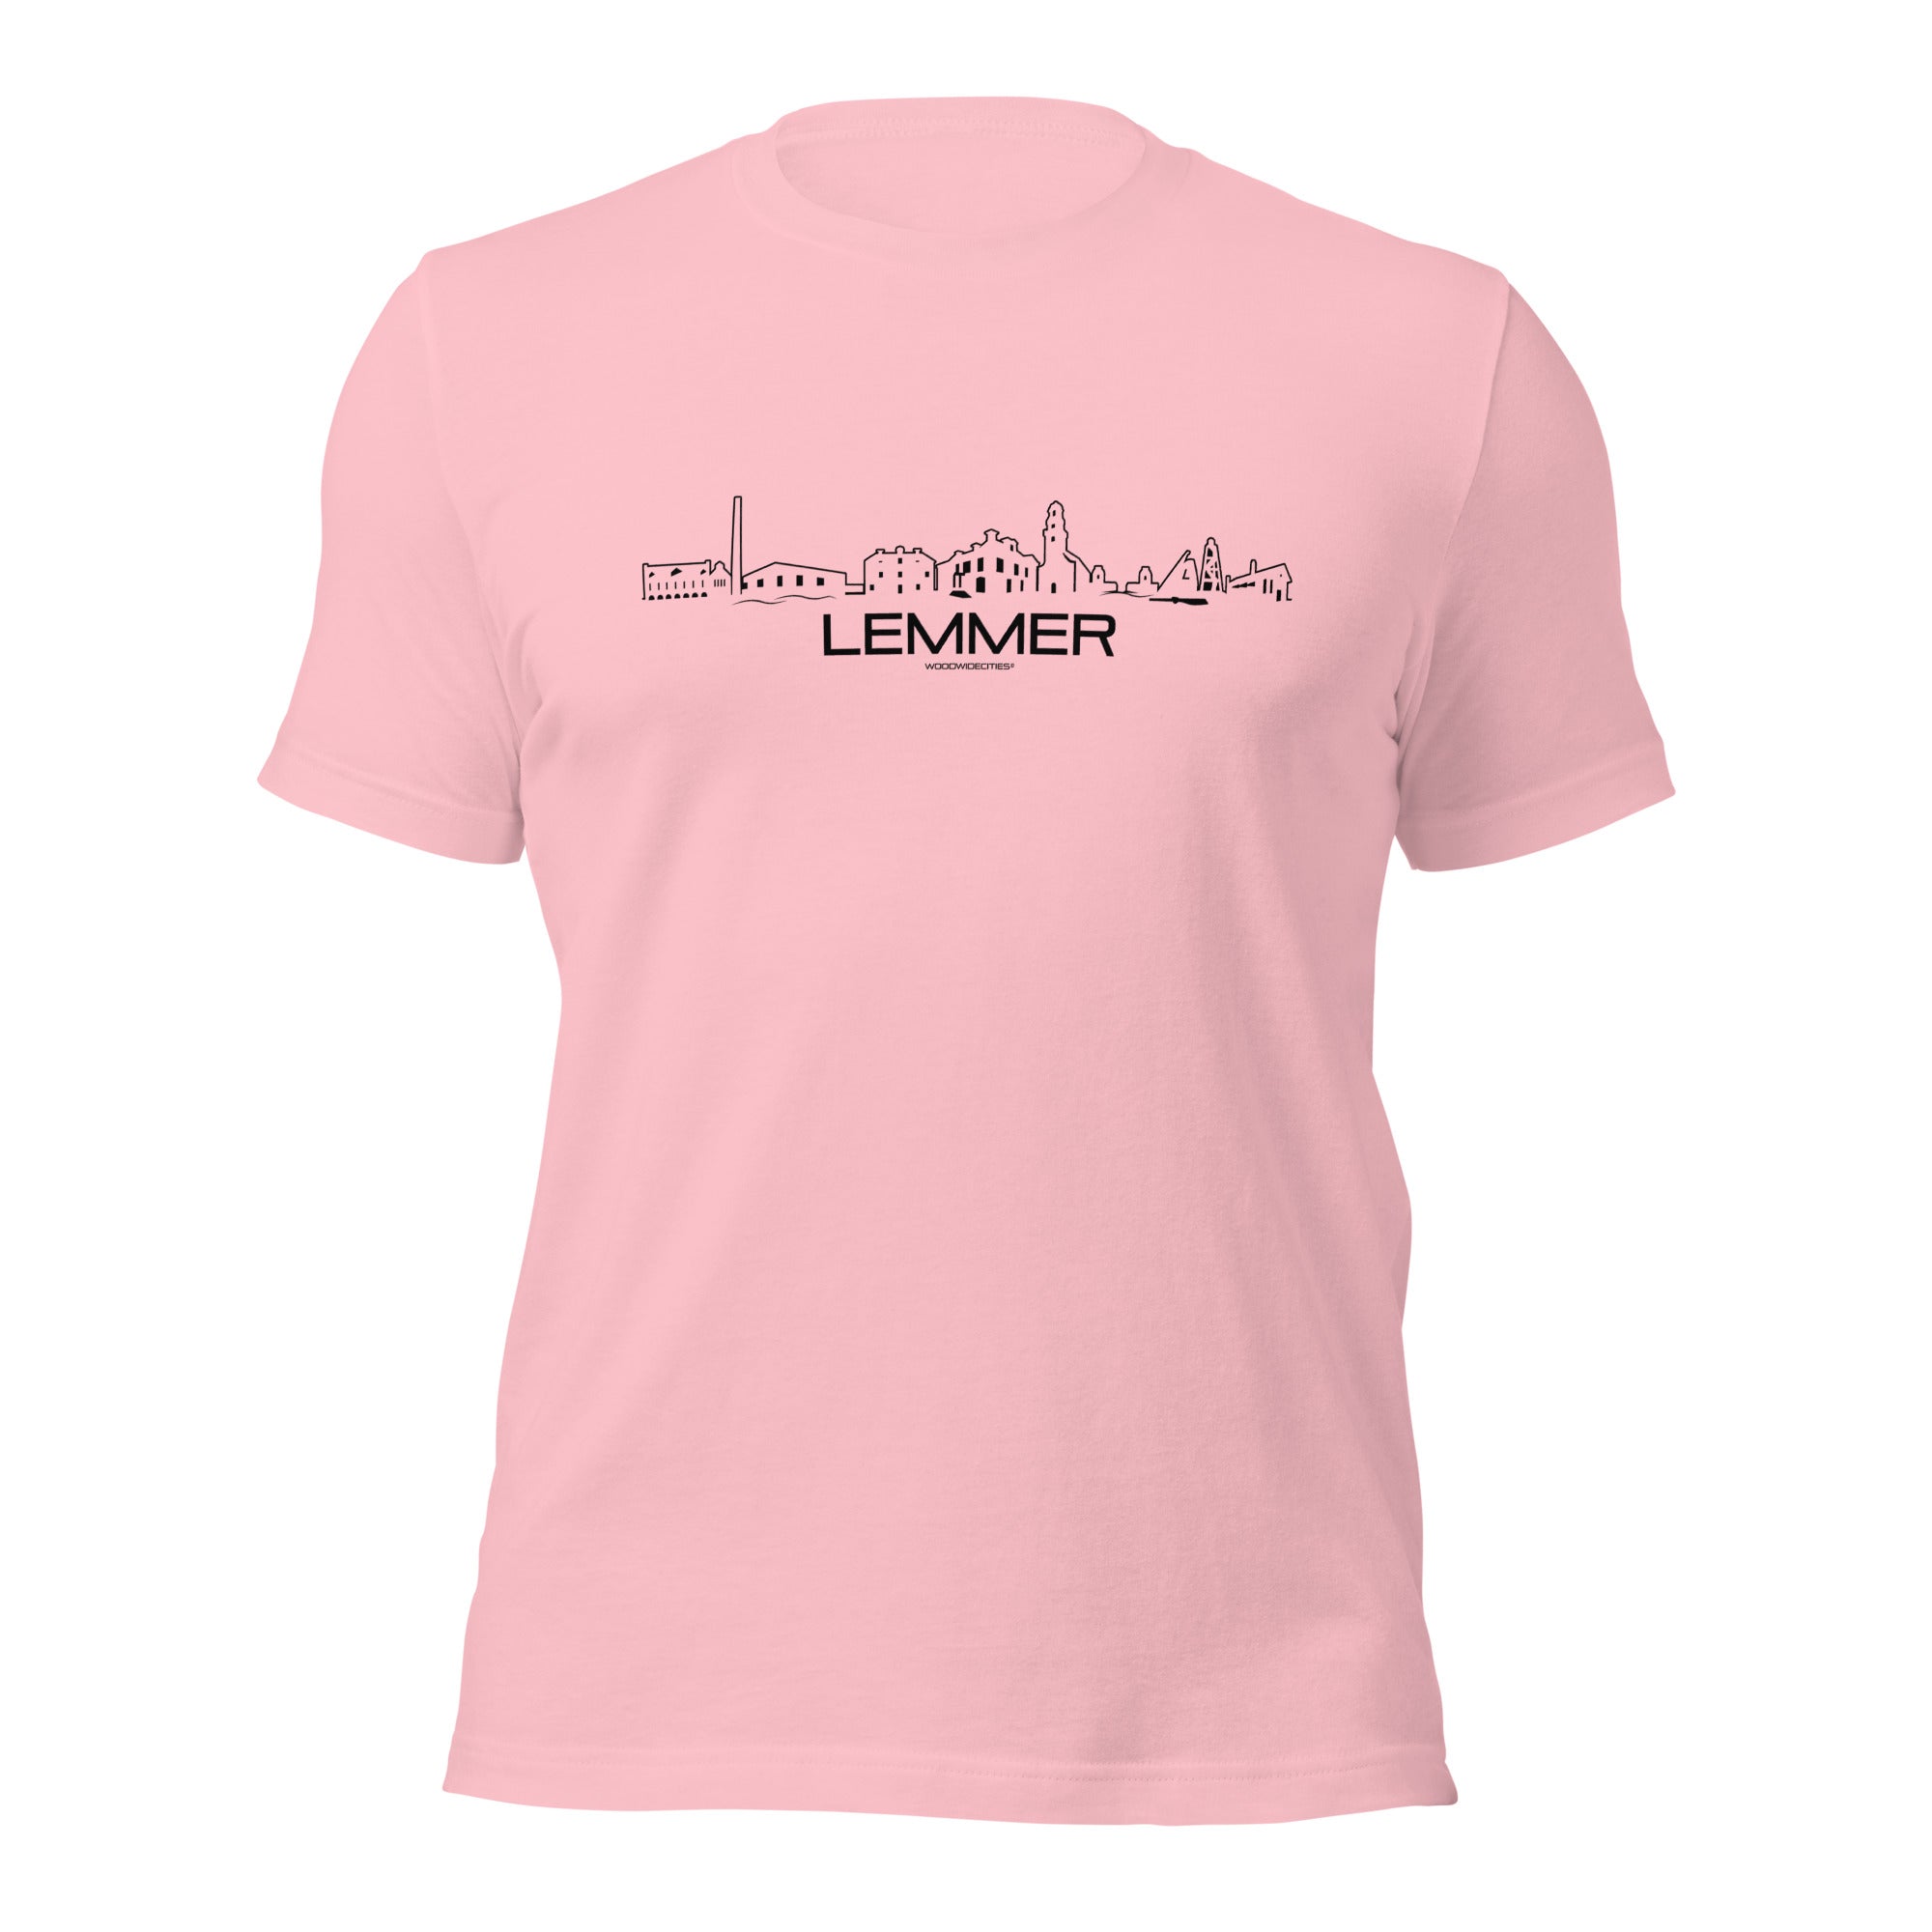 T-Shirt Lemmer Pink S houten cadeau decoratie relatiegeschenk van WoodWideCities